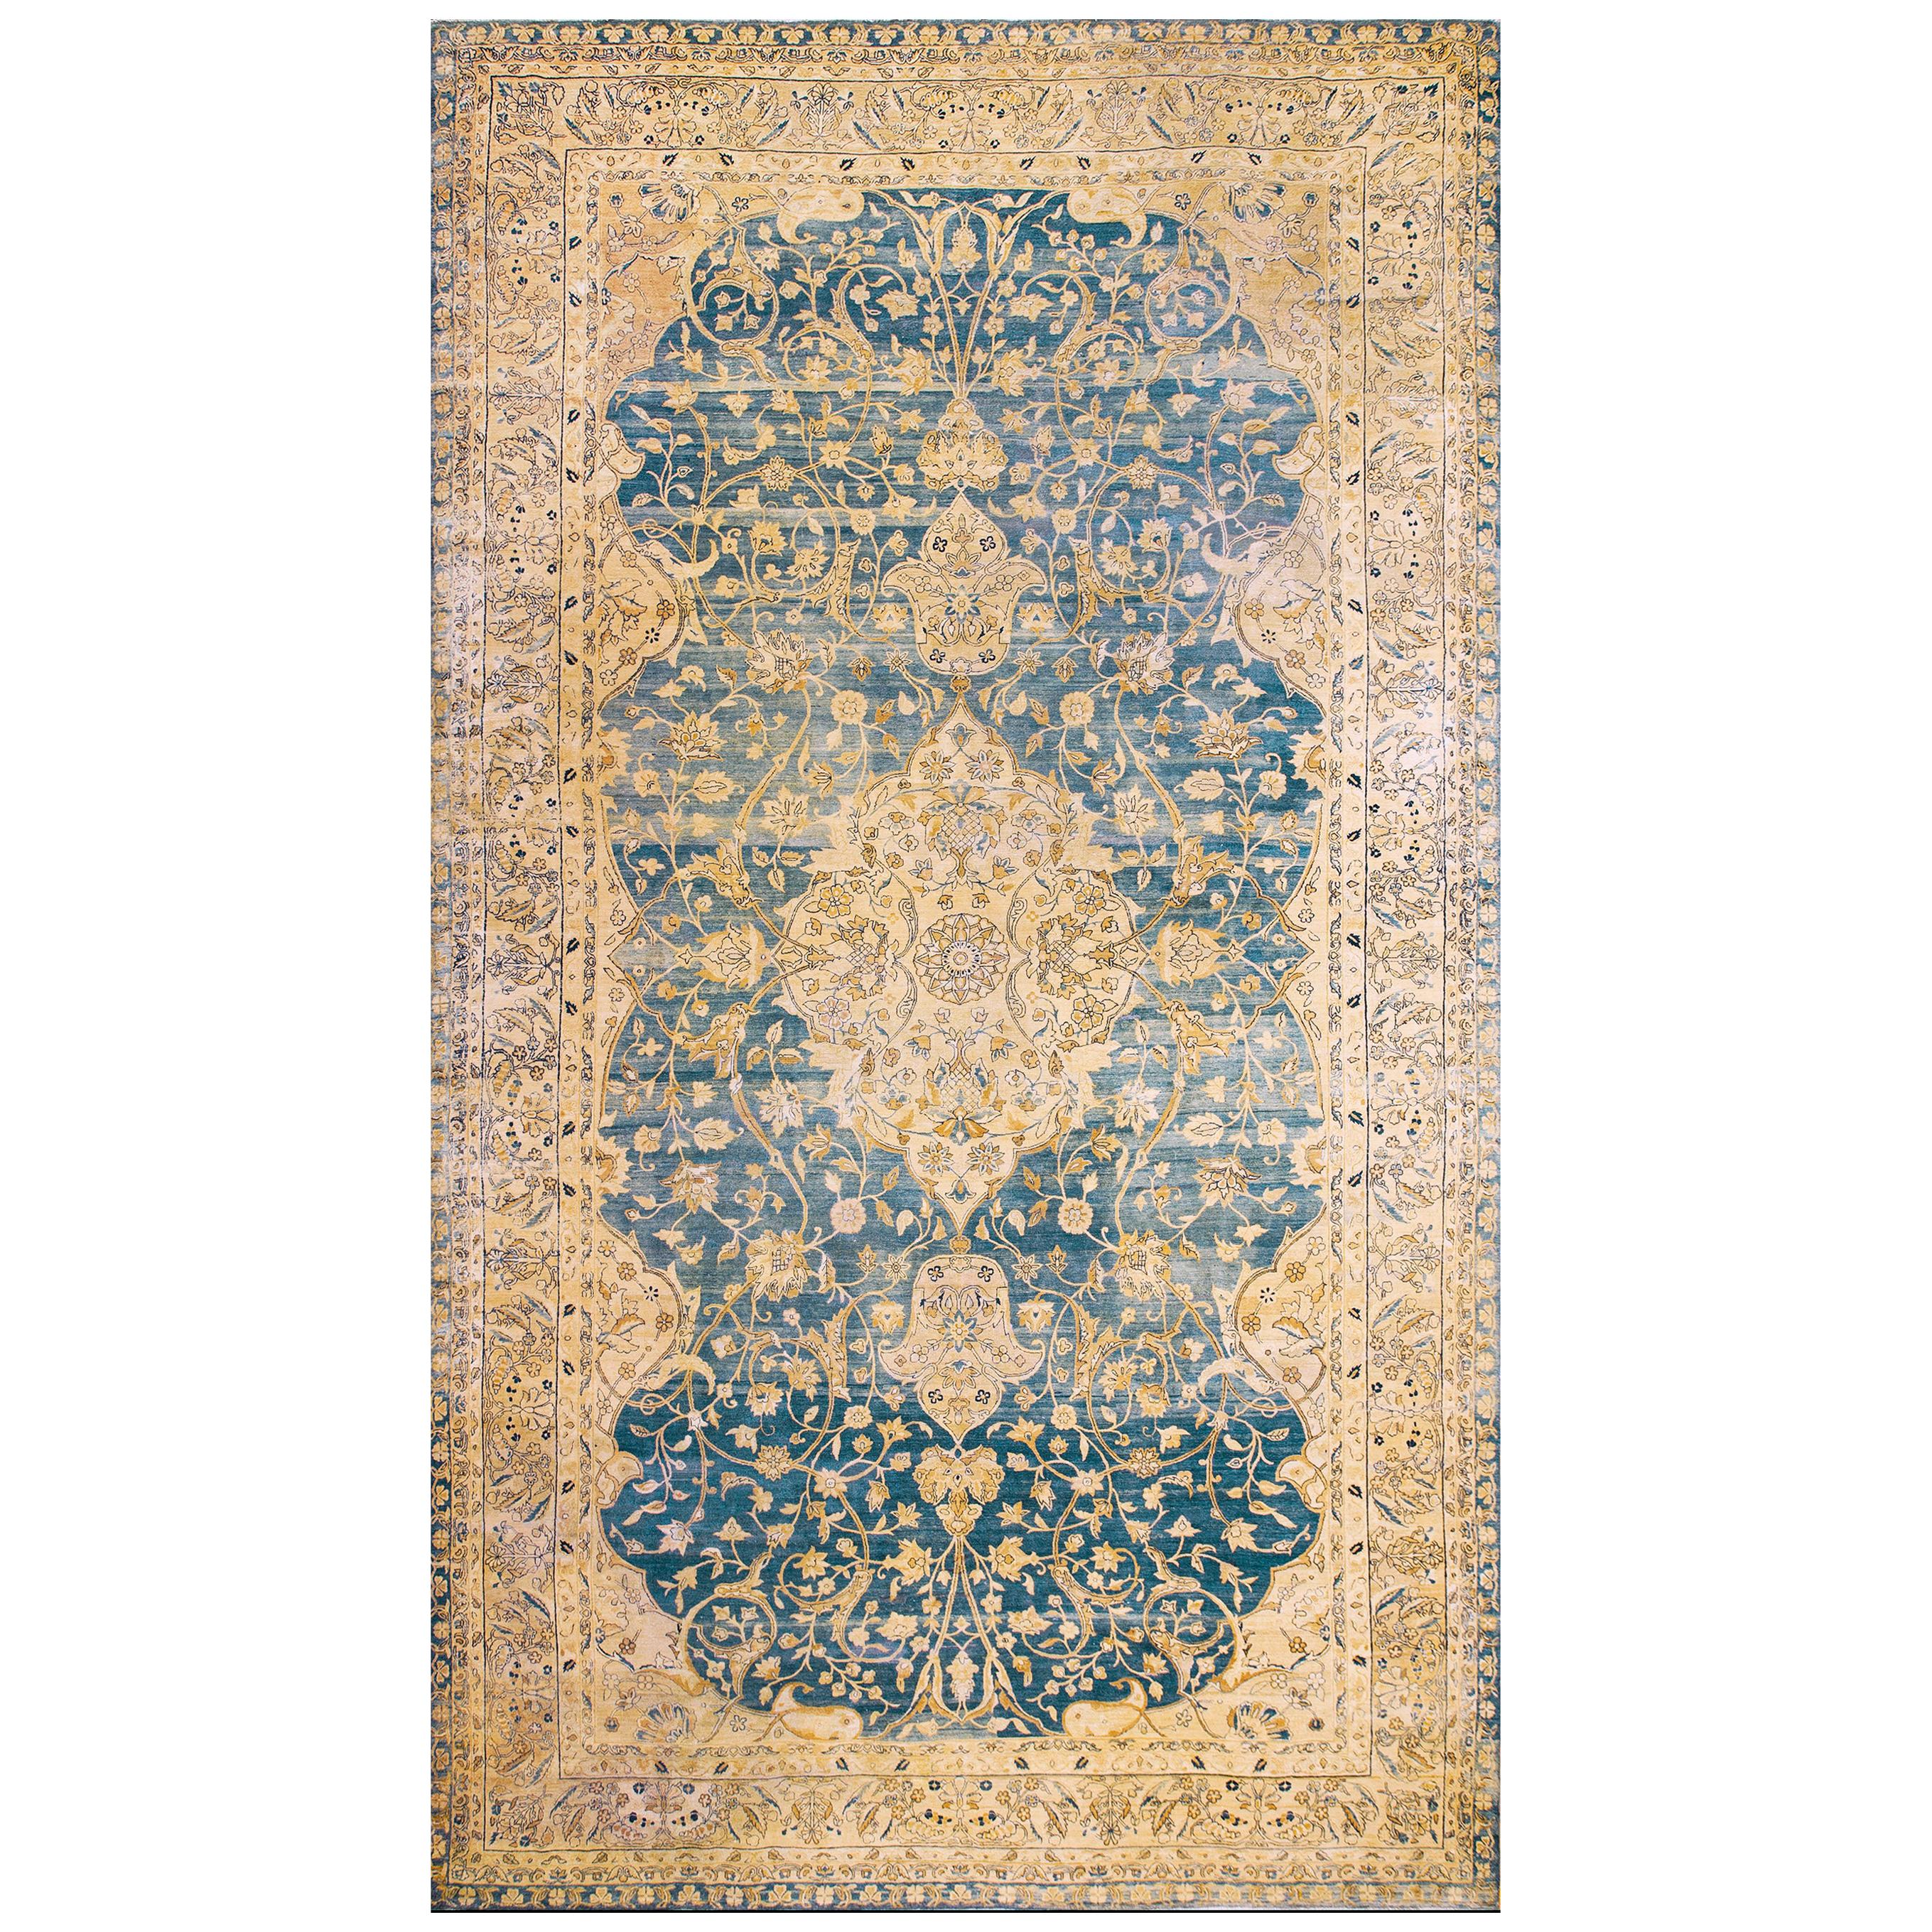 Early 20th Century S.E. Persian Kerman Carpet ( 9'9" x 17'6" - 297 x 533 ) For Sale